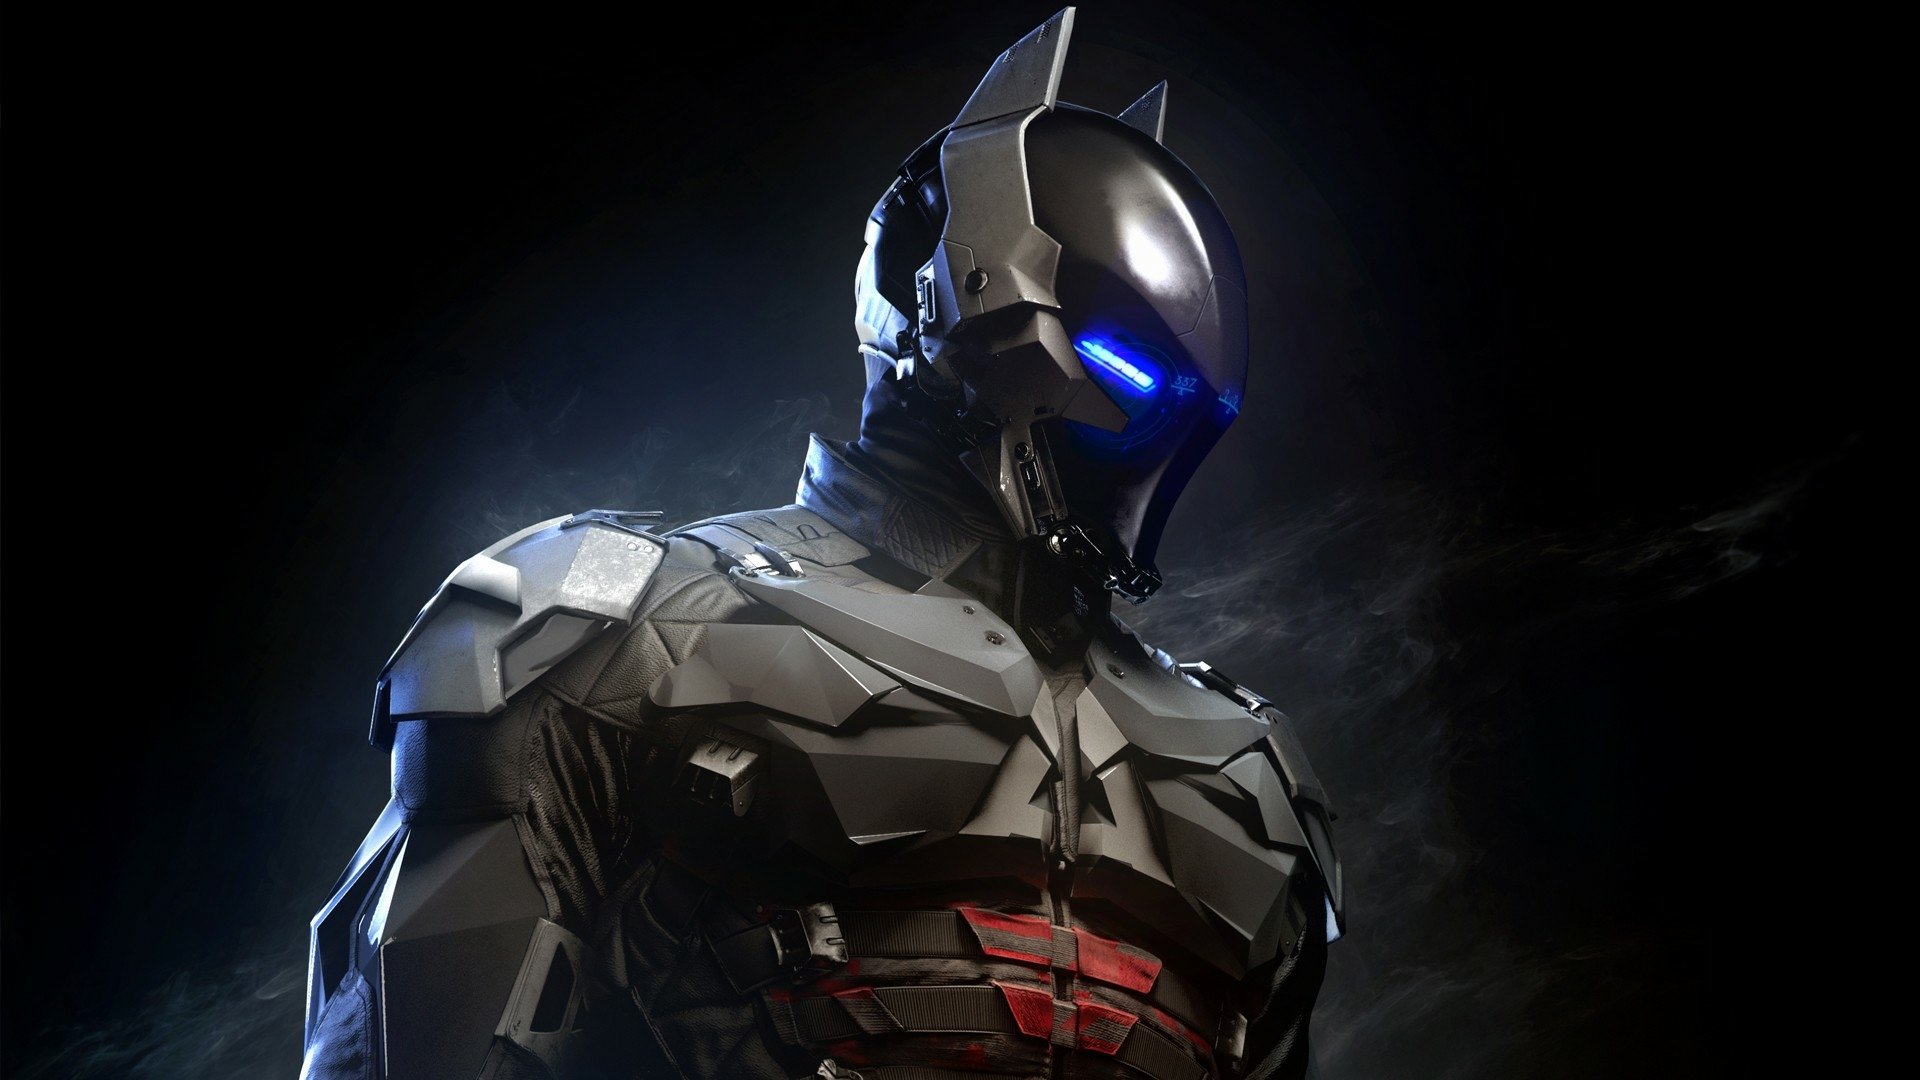 62+ Batman Arkham Knight 4K